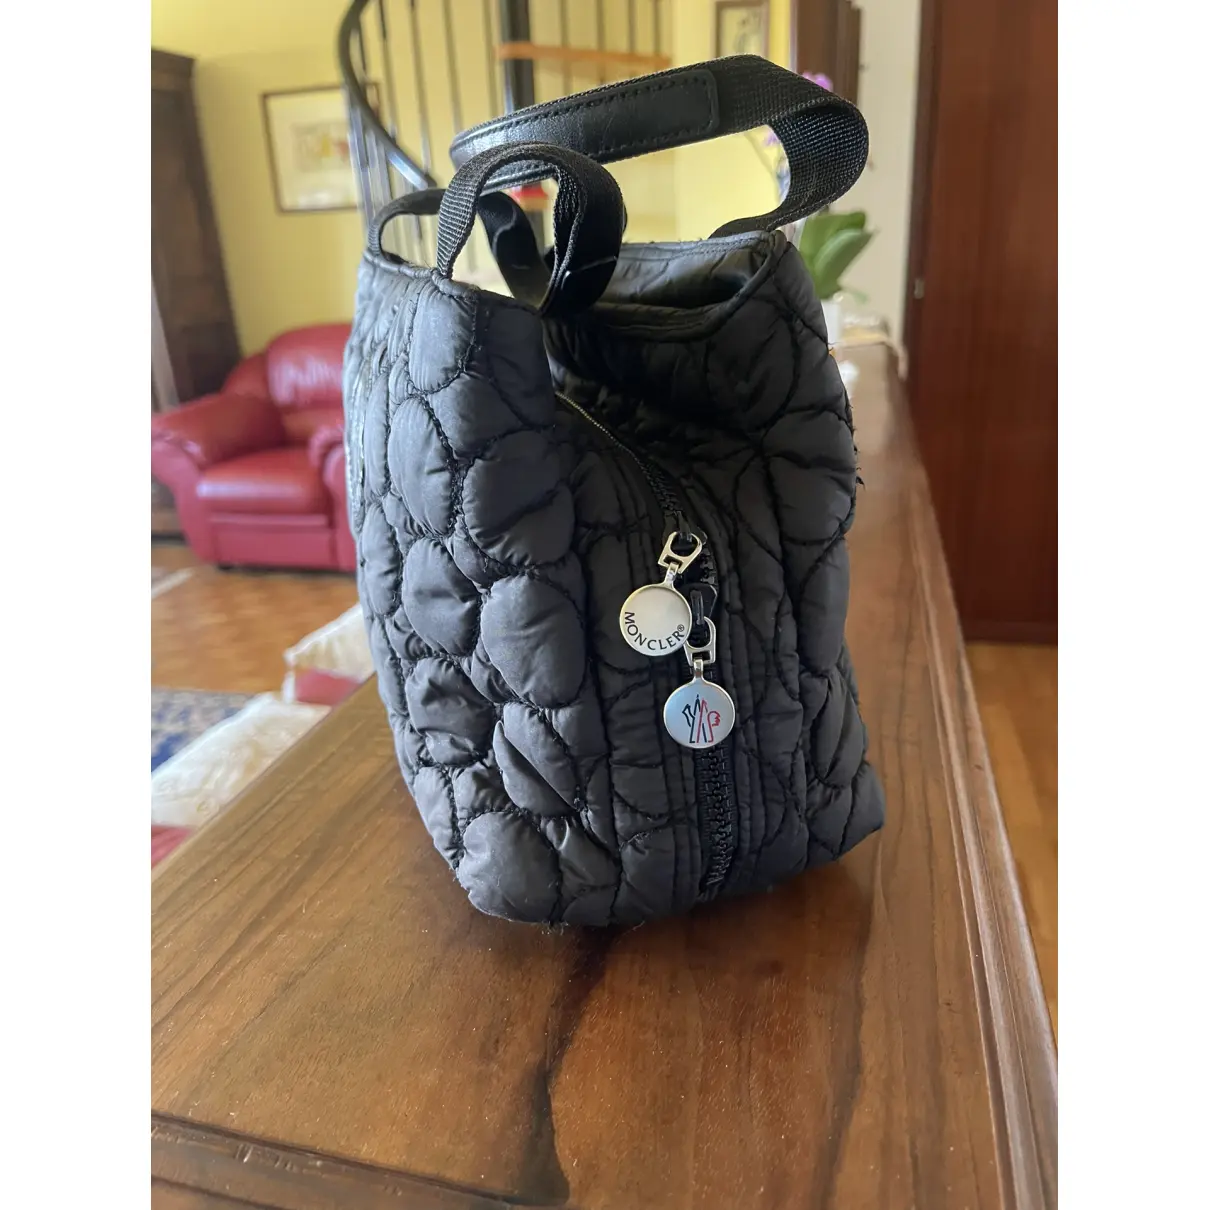 Luxury Moncler Handbags Women